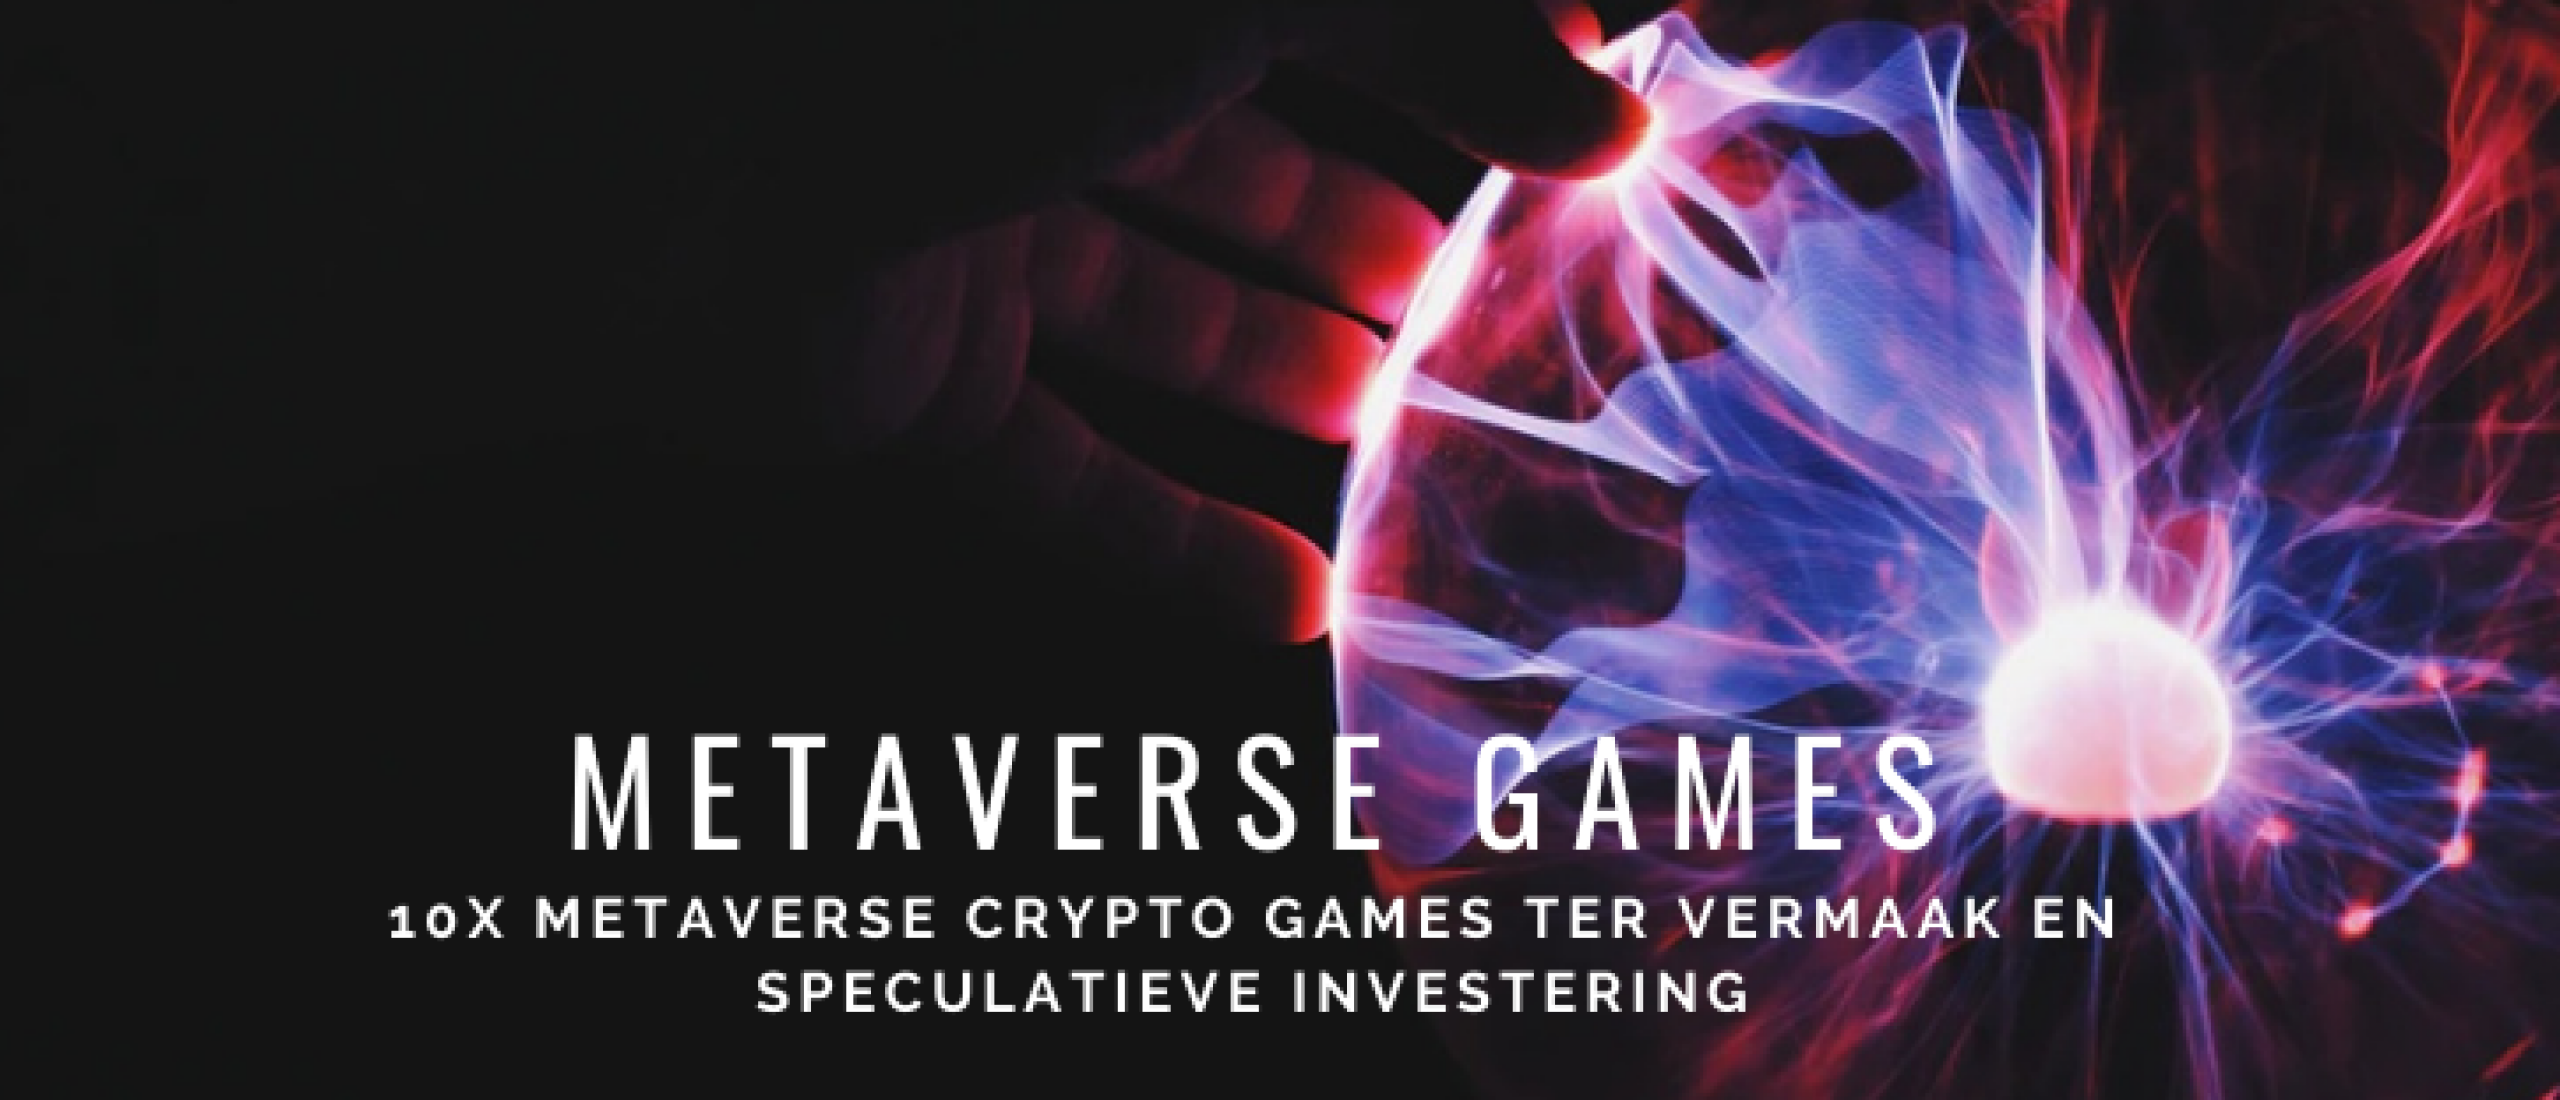 metaverse-crypto-games